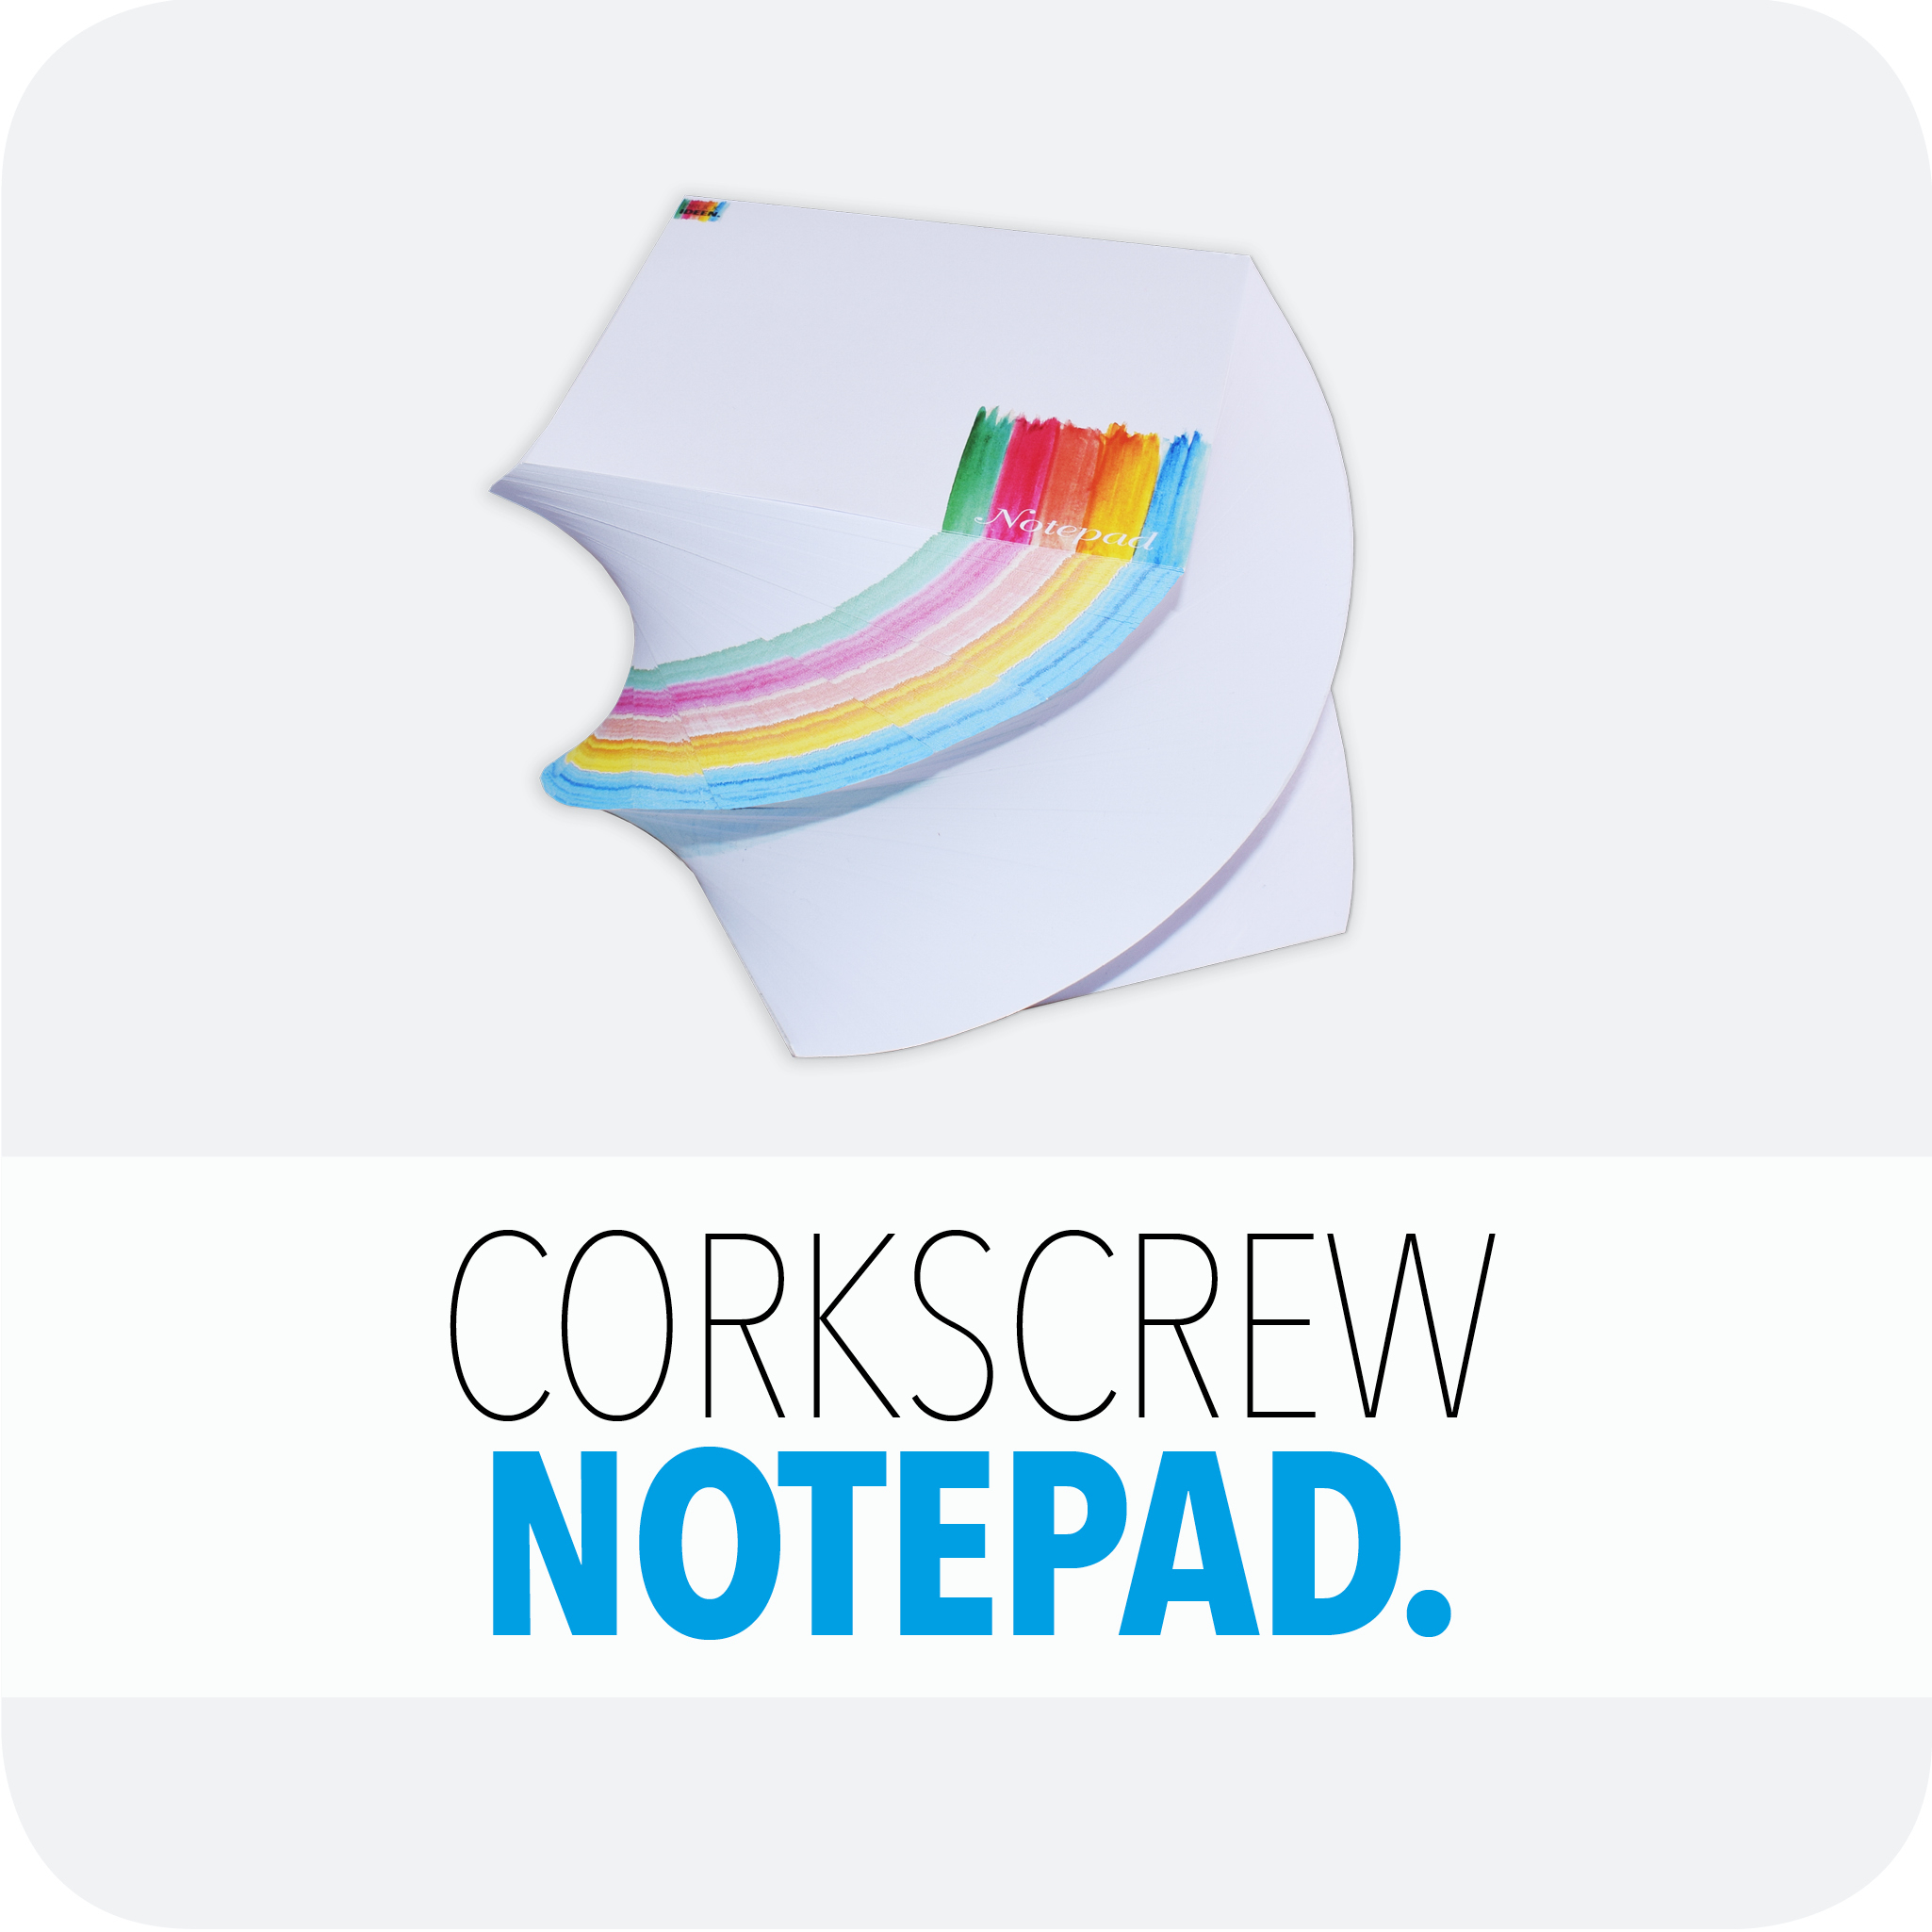 Corkscrew notepad